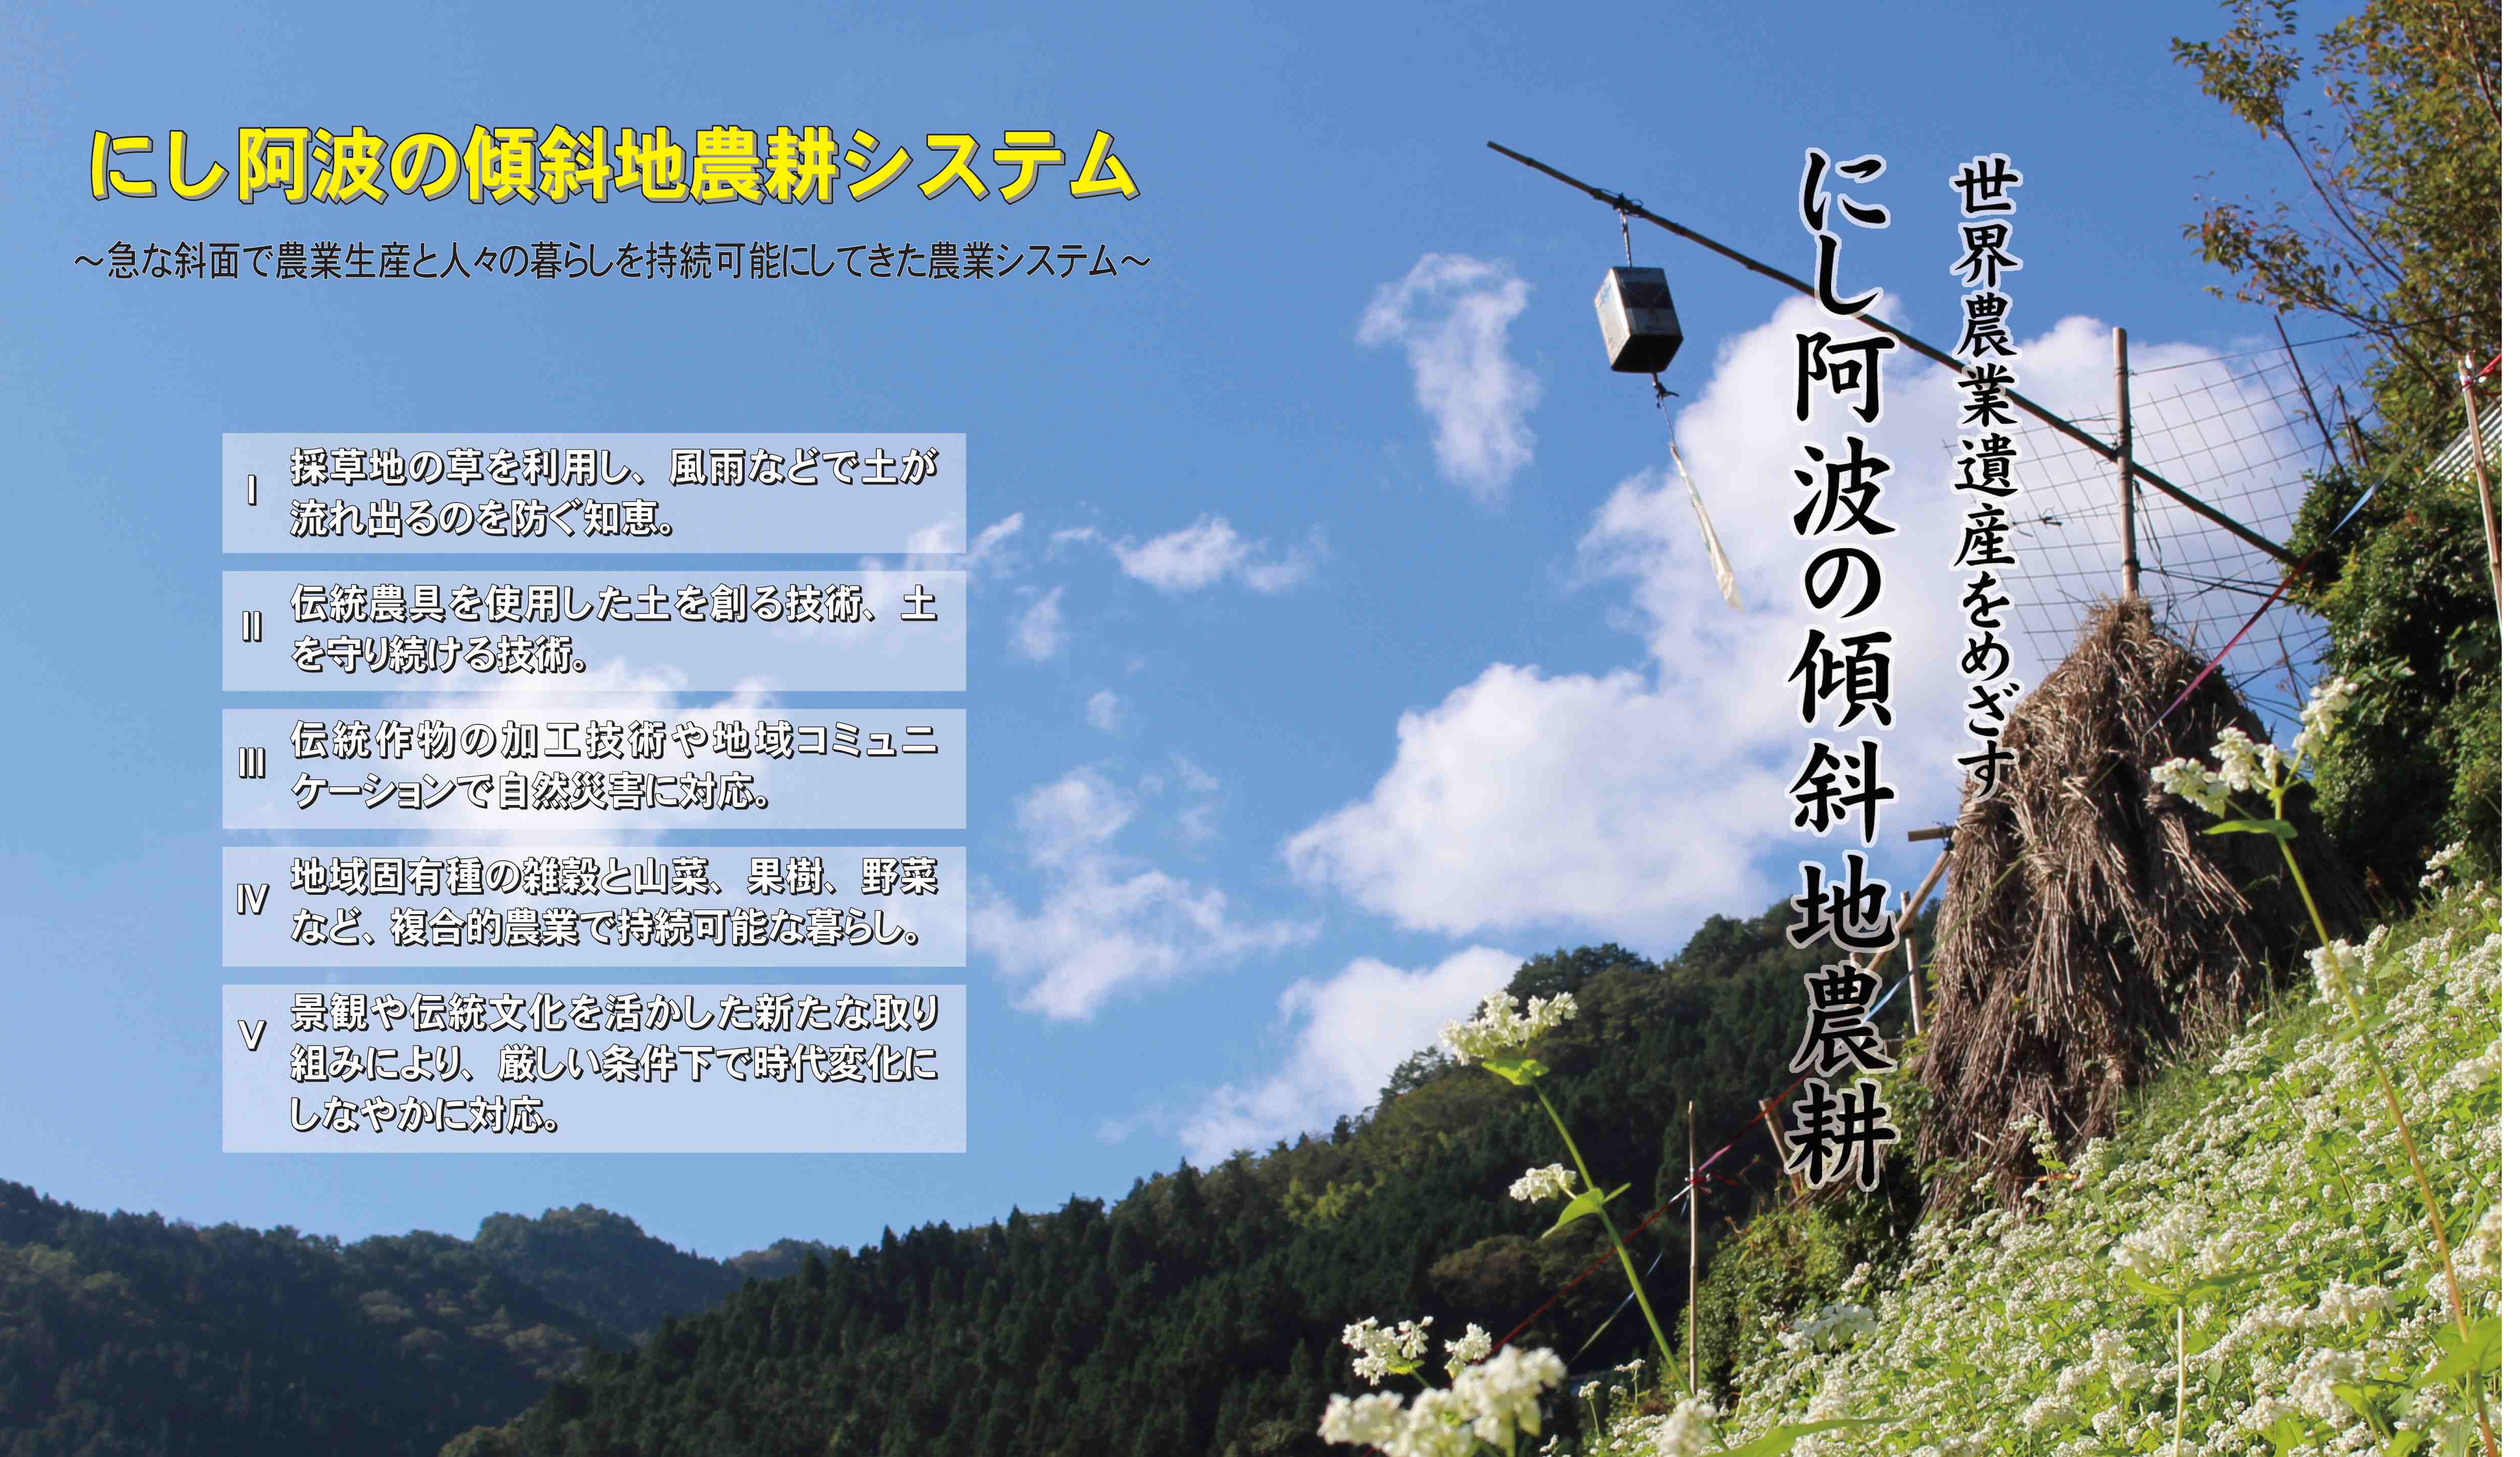 8089e50294910c6cb163e5cb54ad137b - にし阿波の傾斜地農耕システムが『日本農業遺産』に認定地域に決定